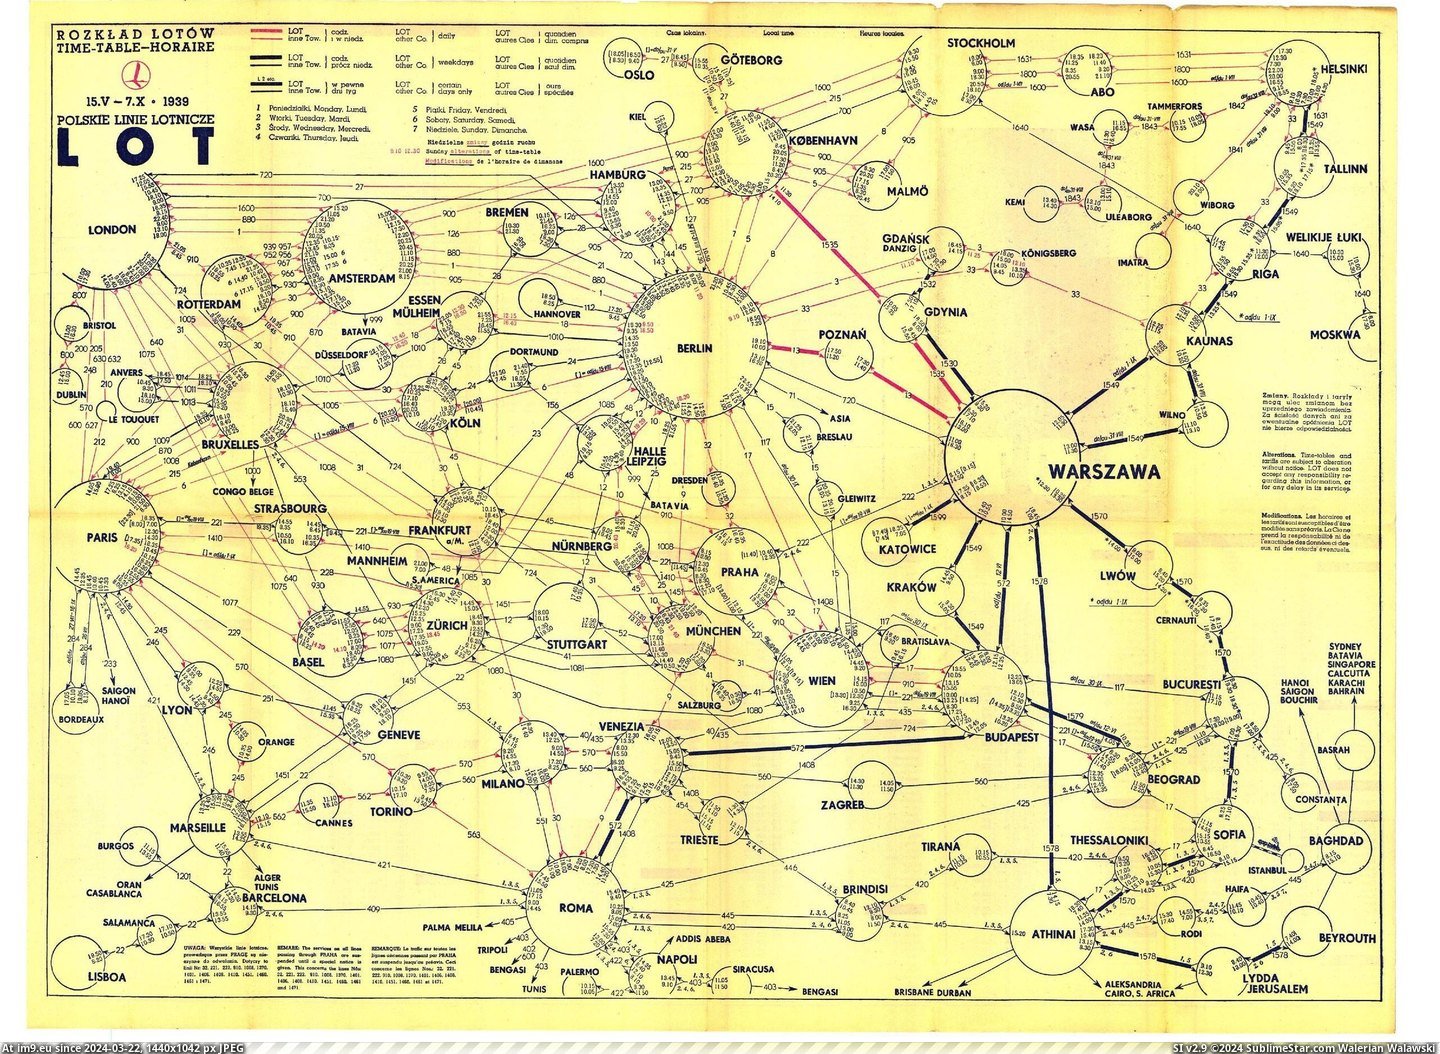 #World #Map #Months #Routes #Airlines #Lot #Polish #War [Mapporn] Map of routes of LOT Polish Airlines in last months before World War II [3662x2667] Pic. (Bild von album My r/MAPS favs))